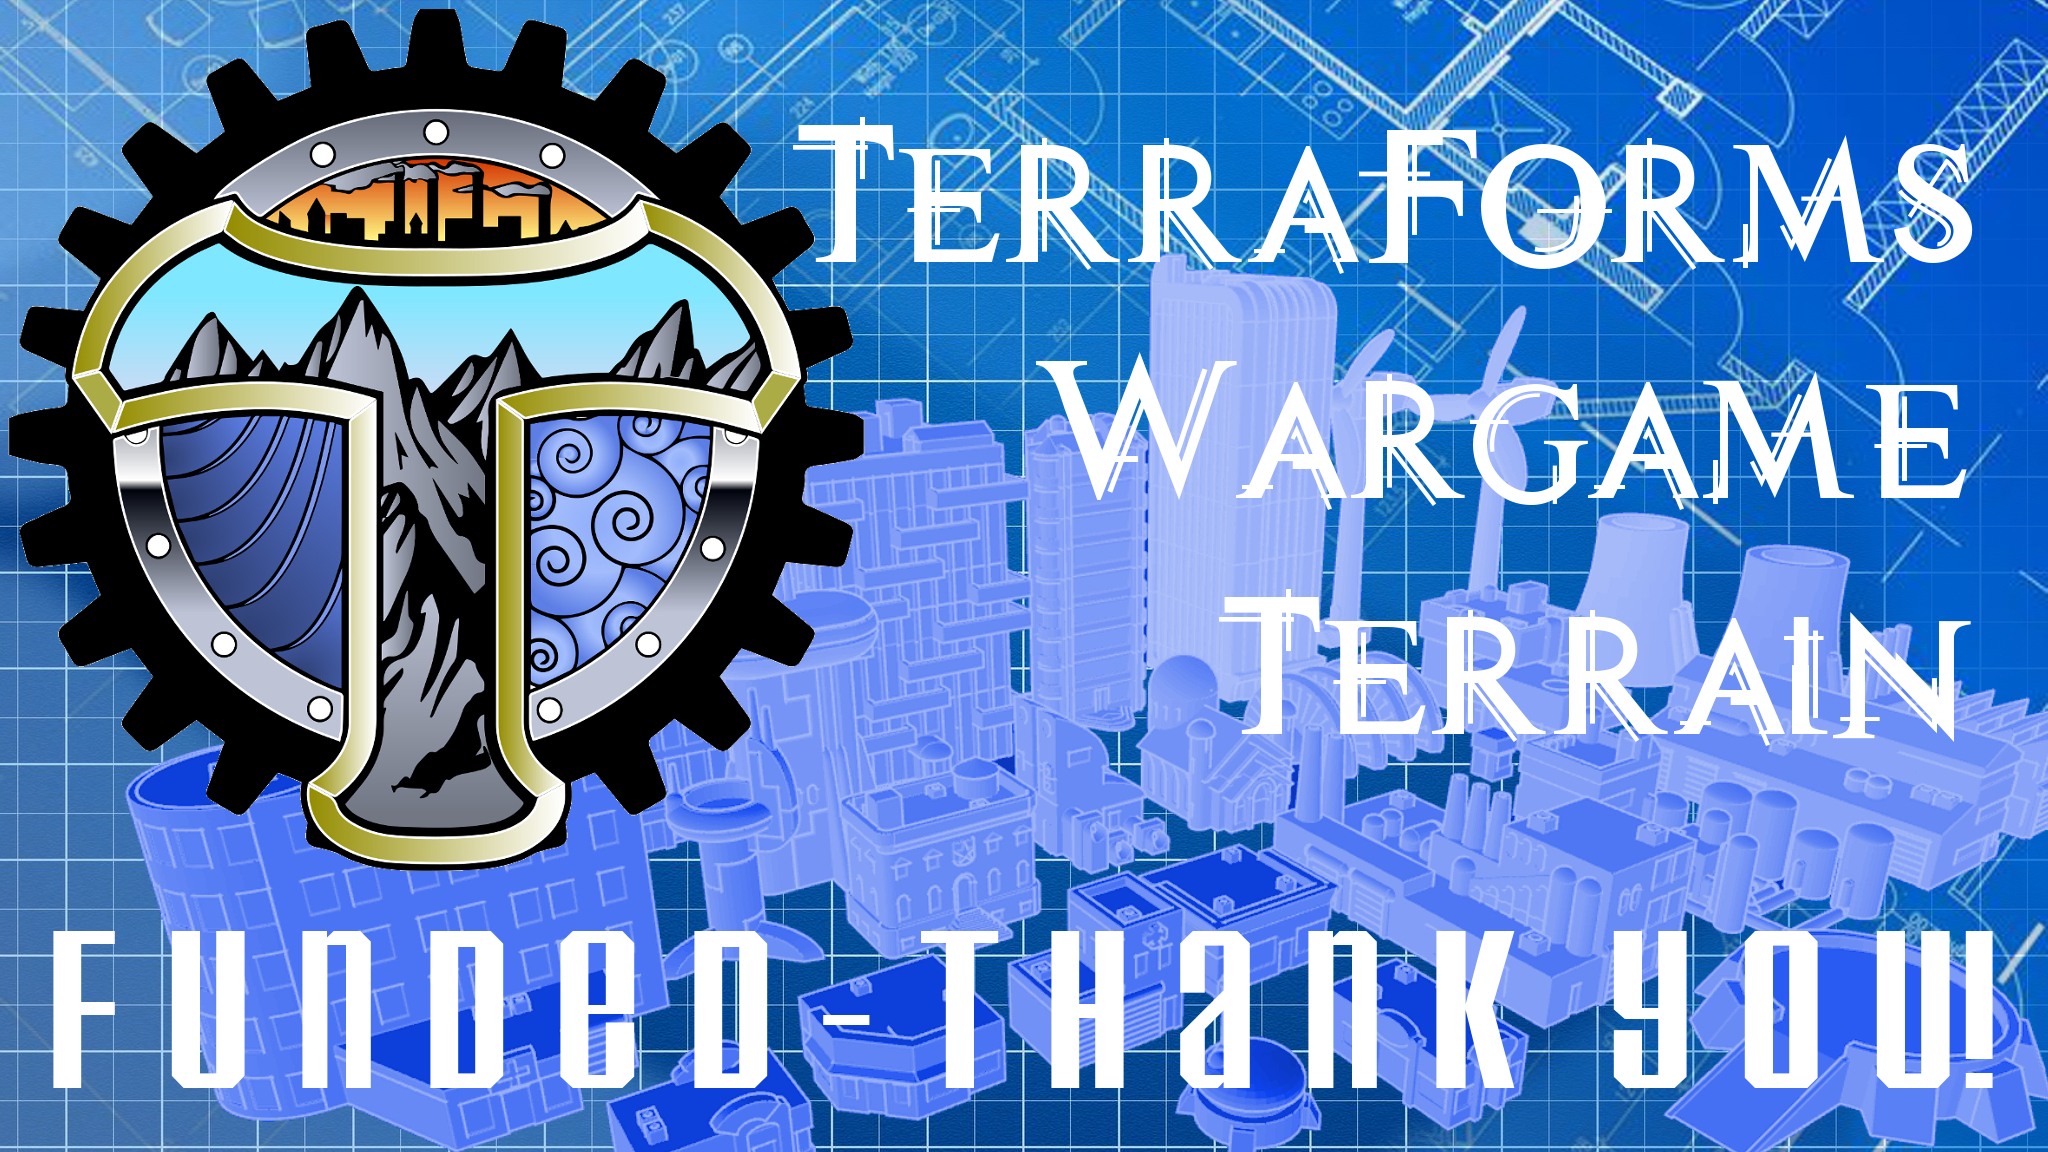 TerraForms Wargame 10mm / 12mm Terrain Kickstarter is live